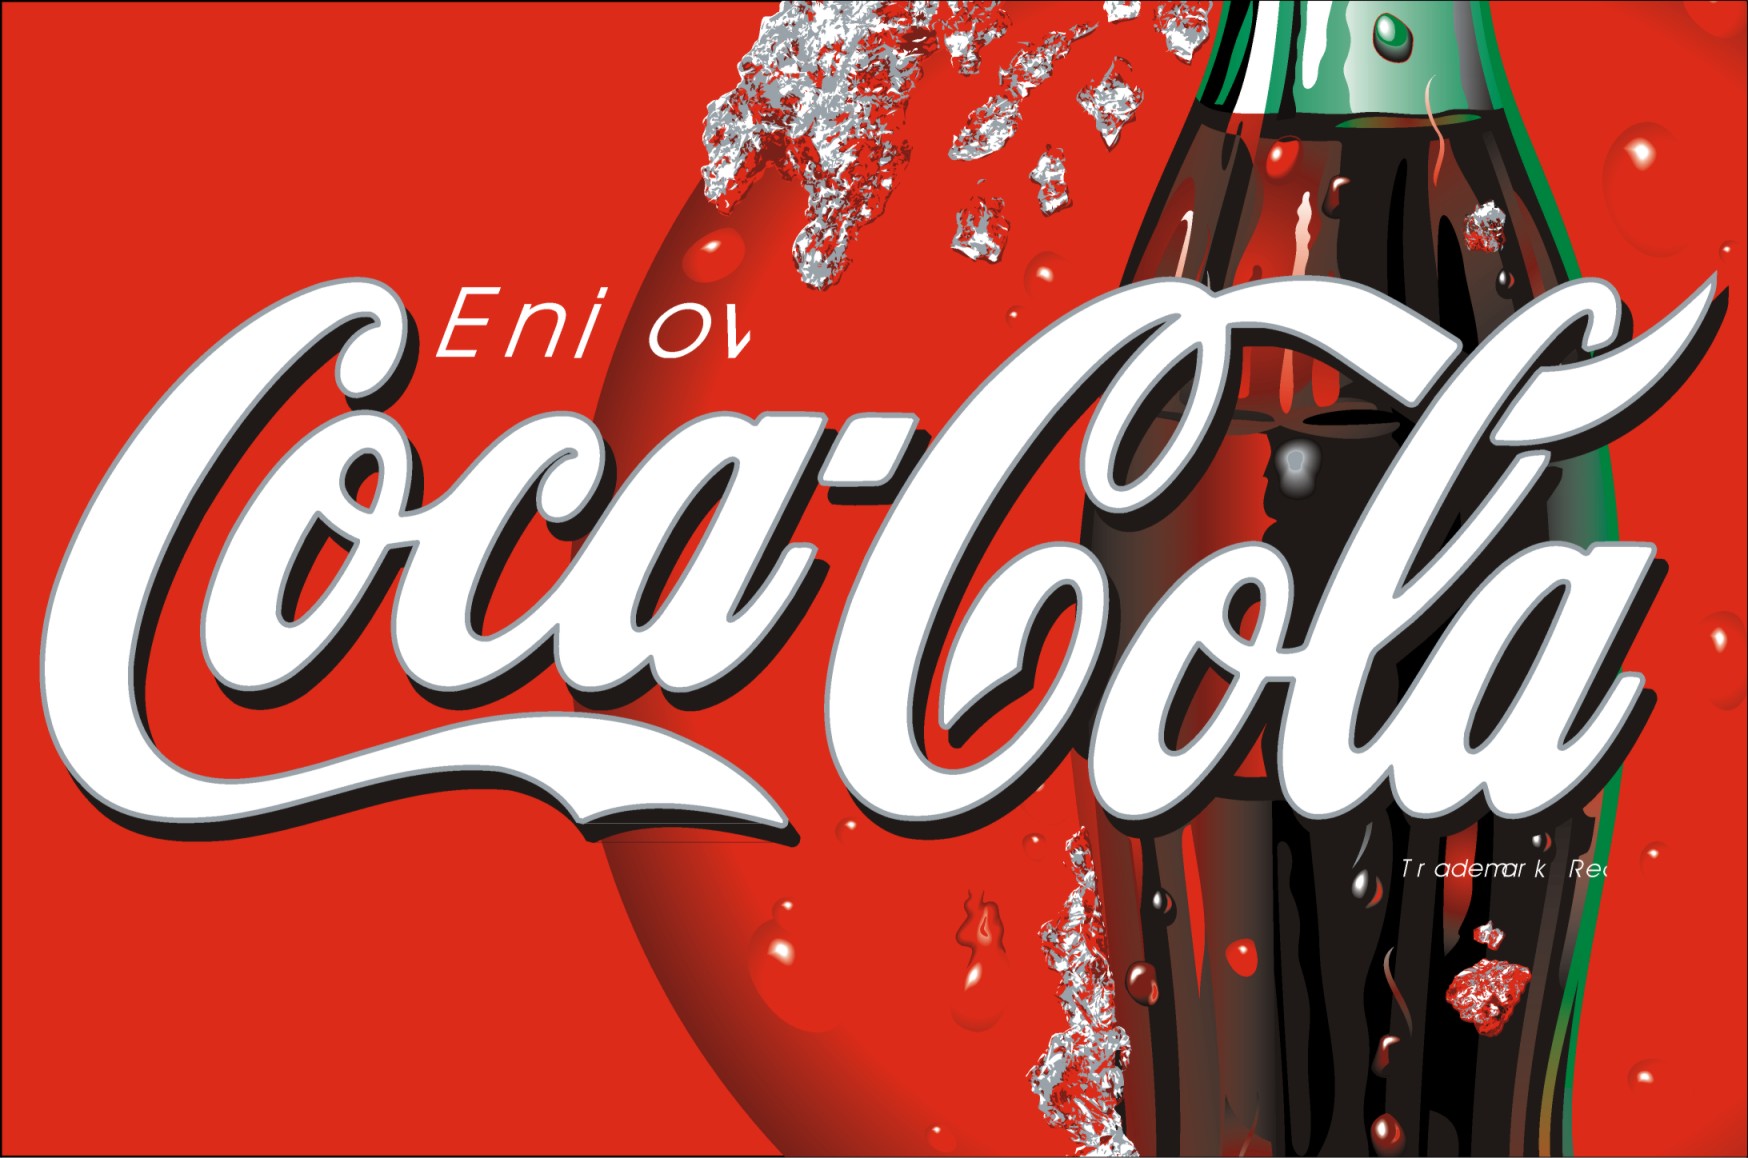 Everyone knows Coca-Cola. Is advertising still necessary? | JiaYi Liu's